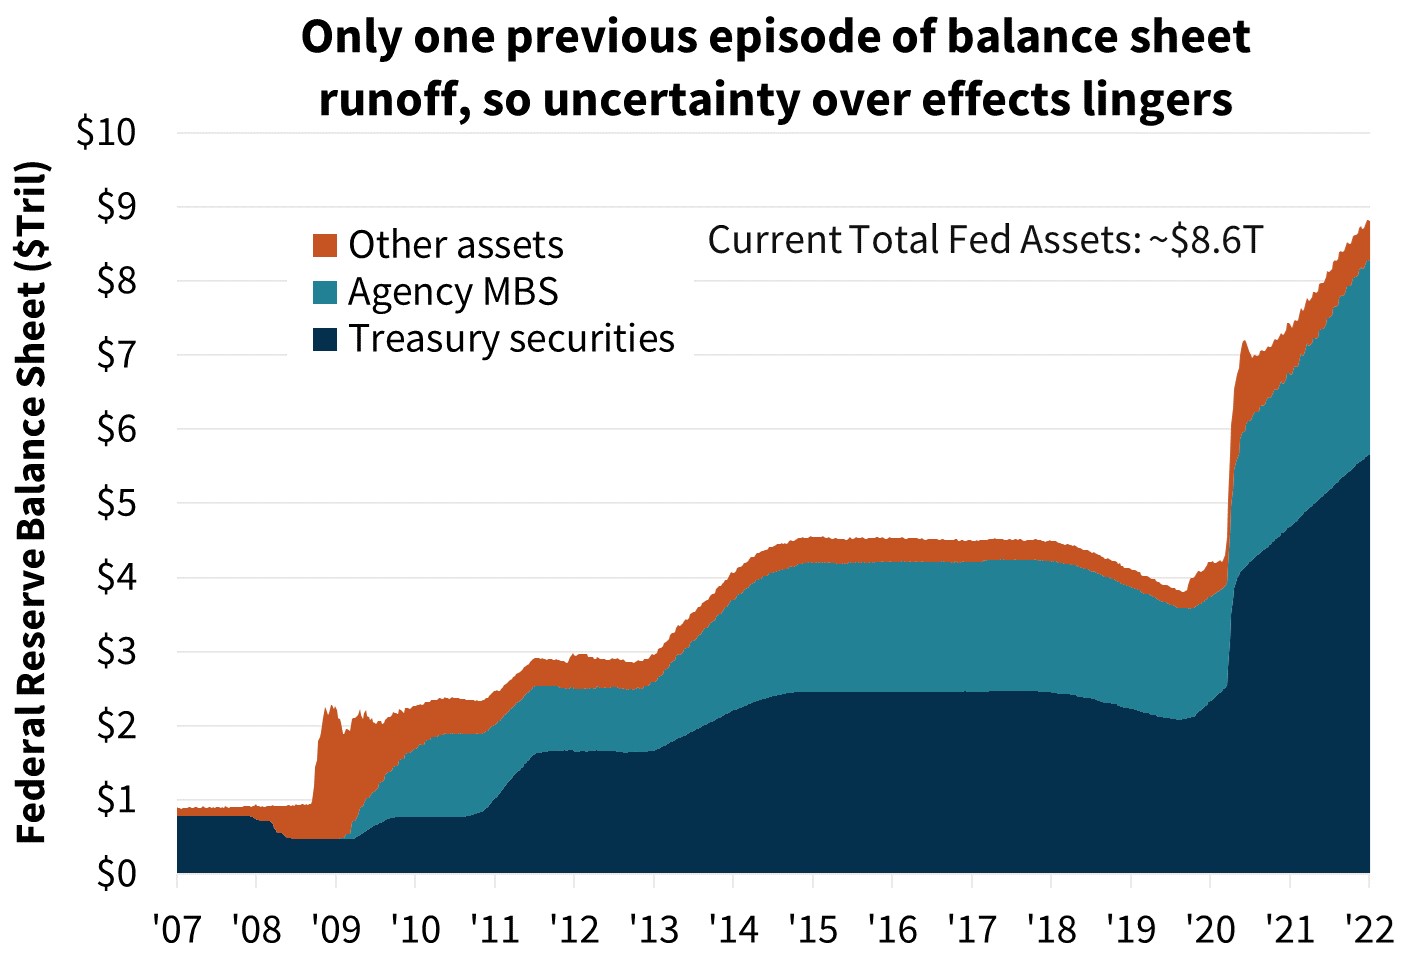 One previous episode of balance sheet runoff